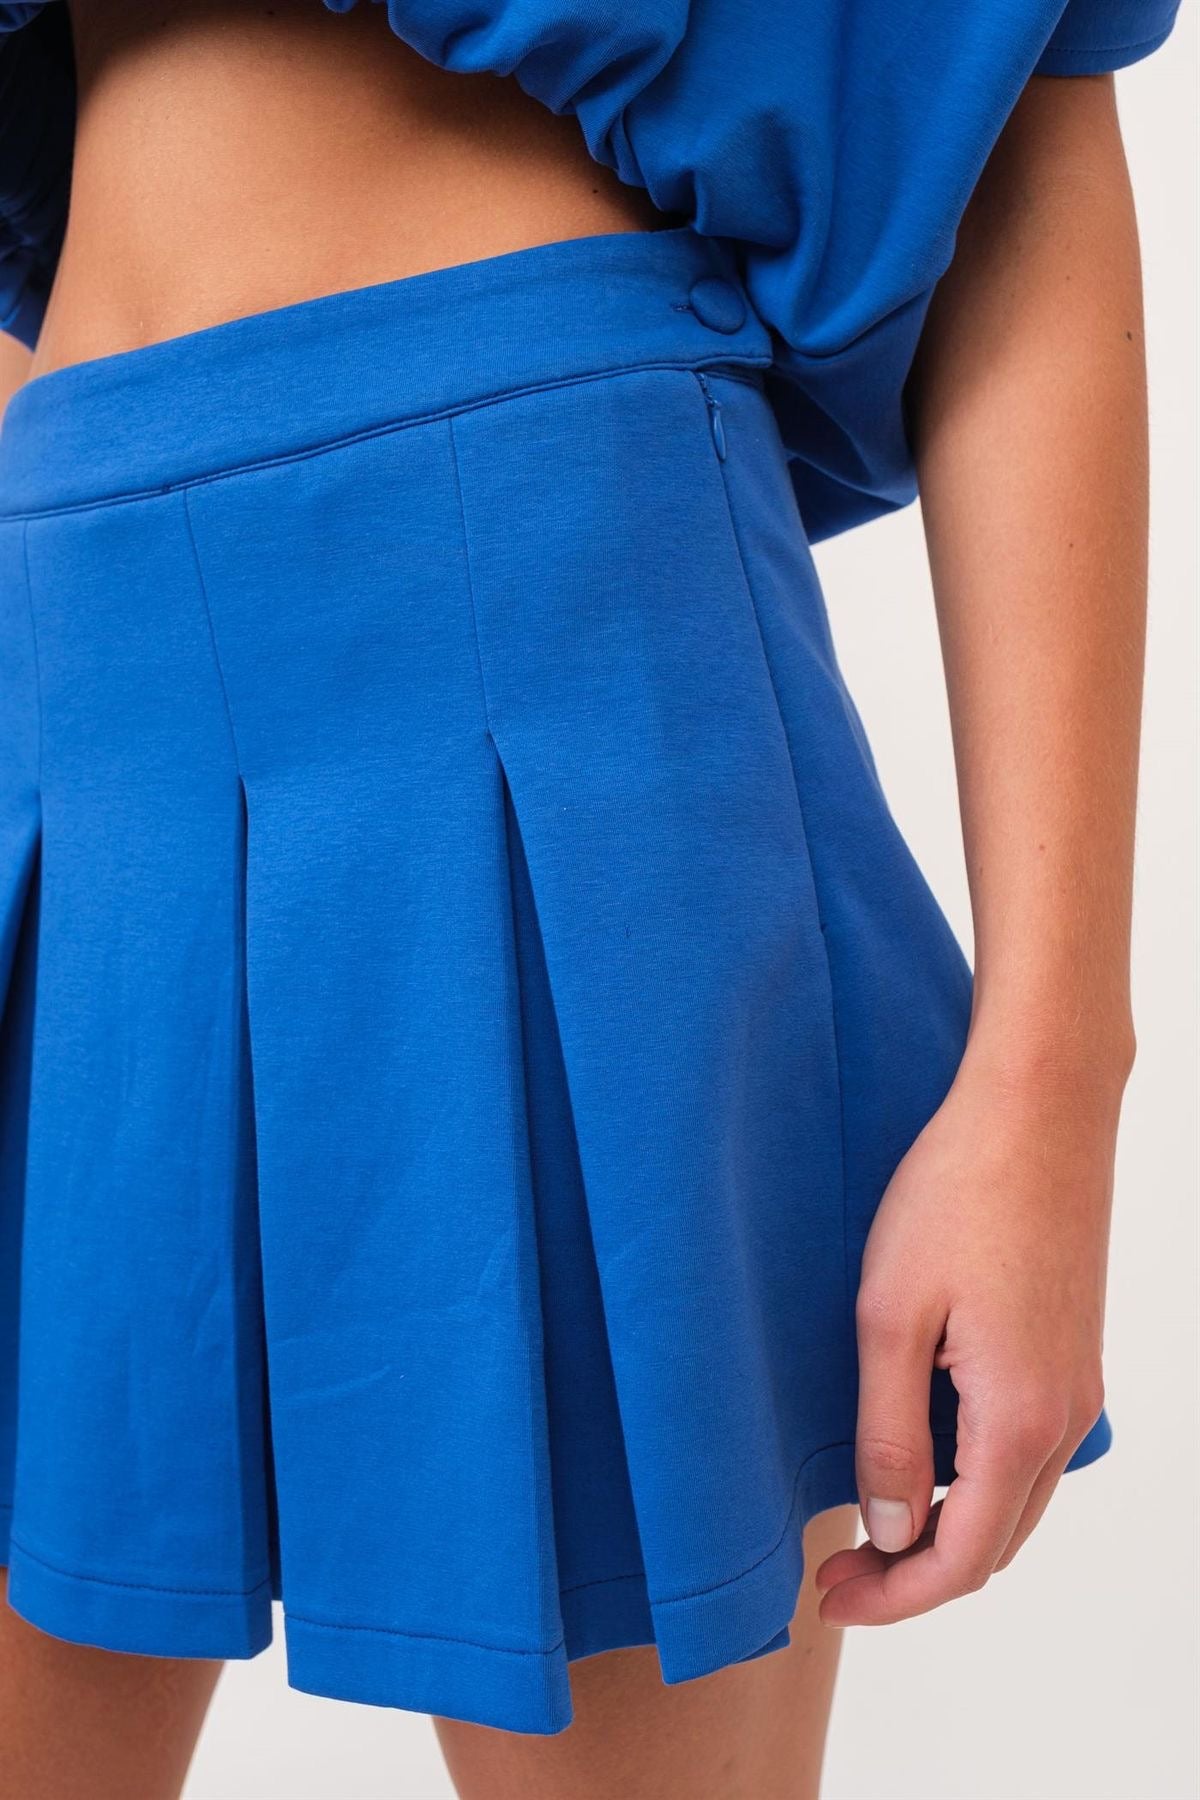 Vibrant Blue Knit Pleated Skirt sold by A Velvet Window